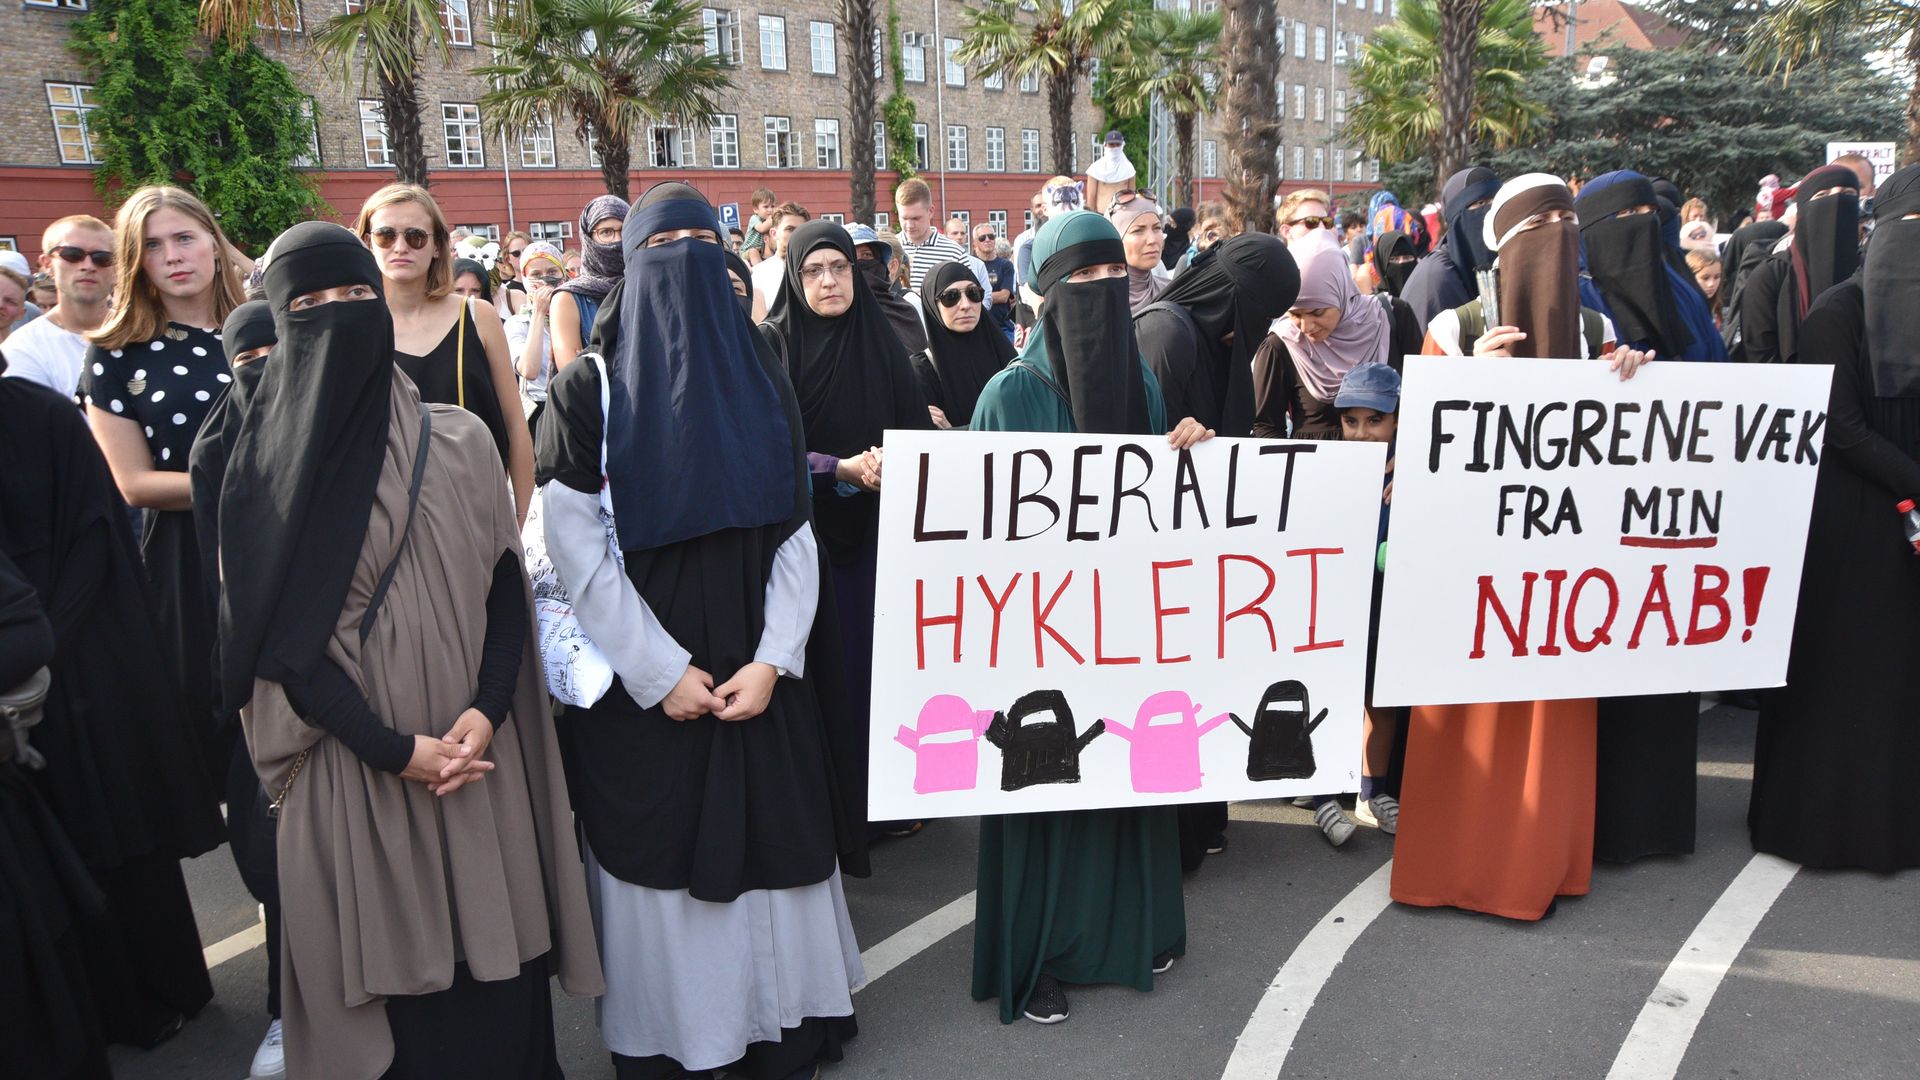 Veiled protestors hold signs in Copenhagen